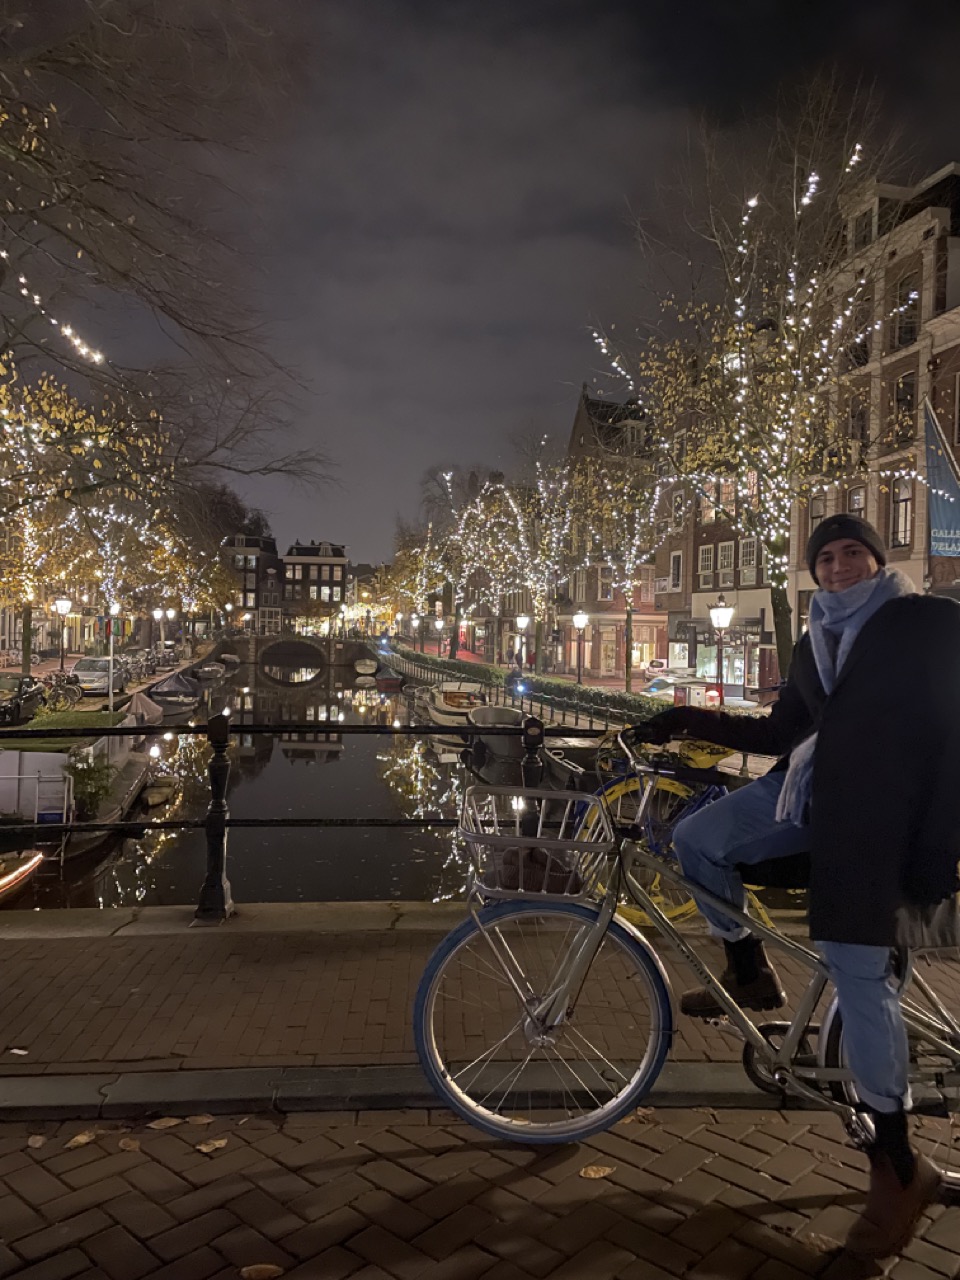 Biking in Amsterdam